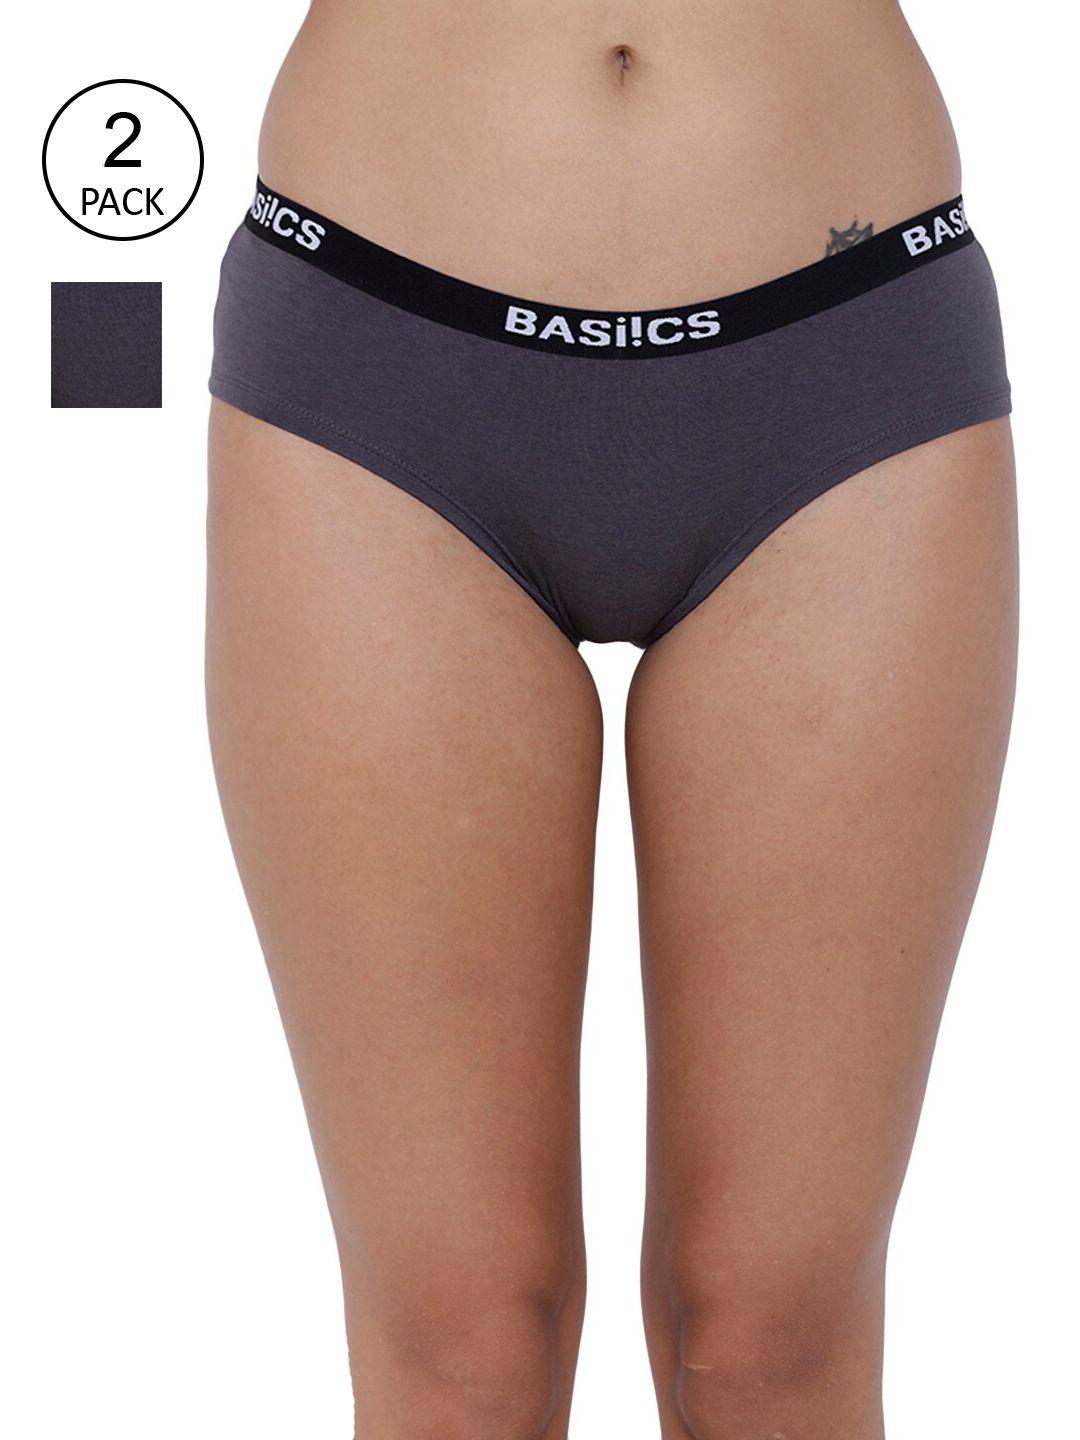 basiics by la intimo women pack of 2 grey solid bikini briefs